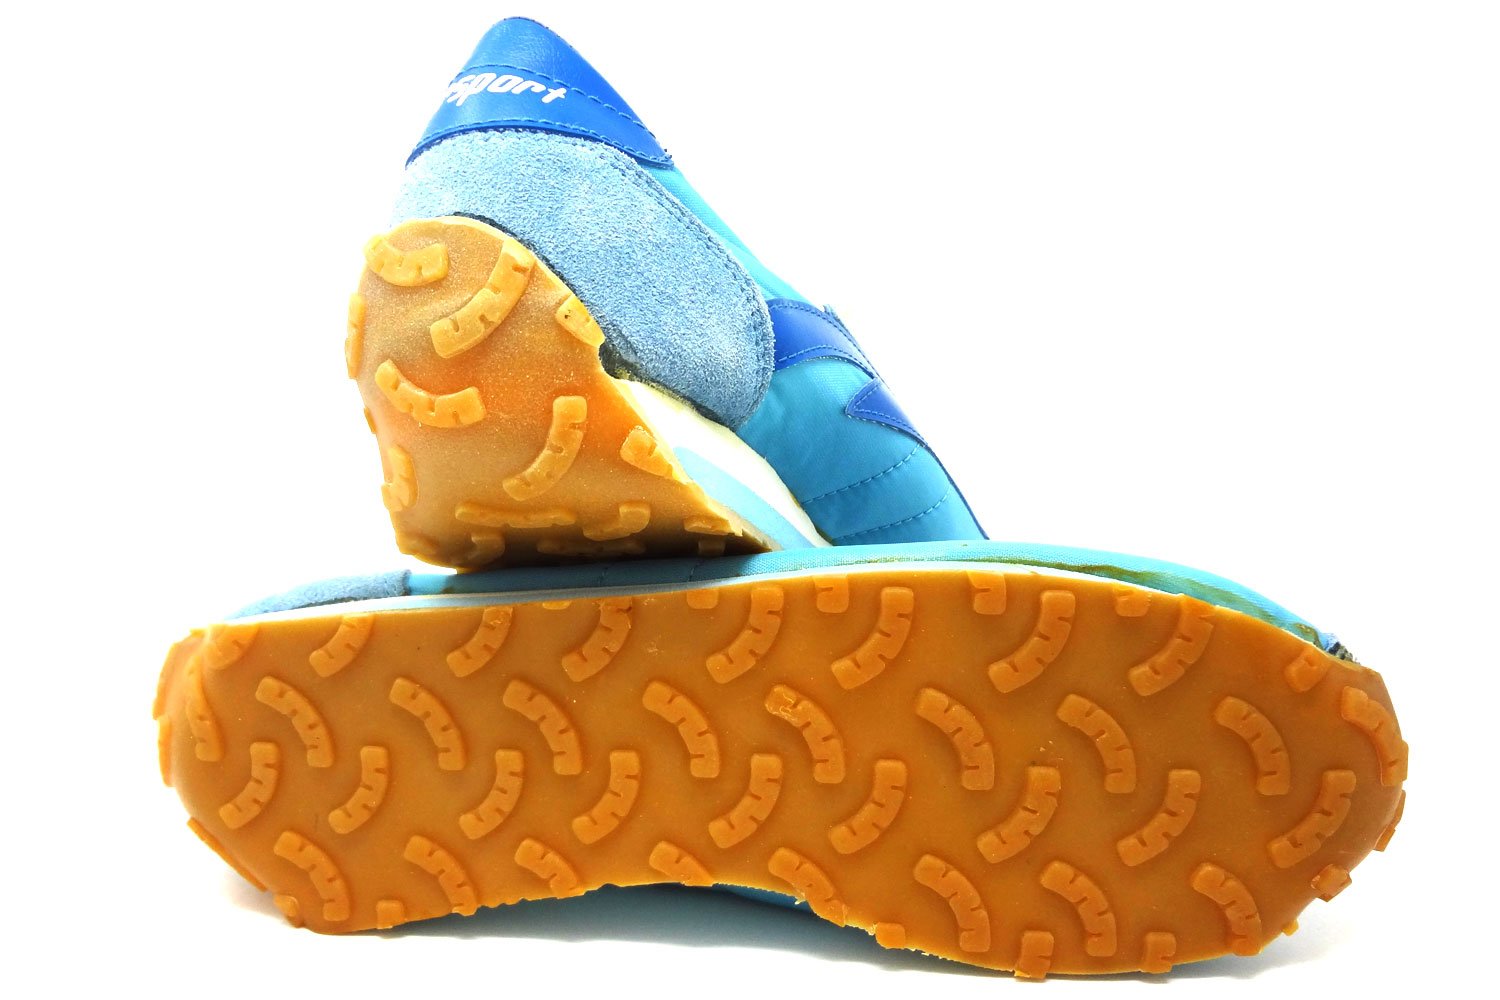 Norsport-Nike-Waffle-Trainer-The-Deffest-vintage-sneakers-sole-tread.jpg